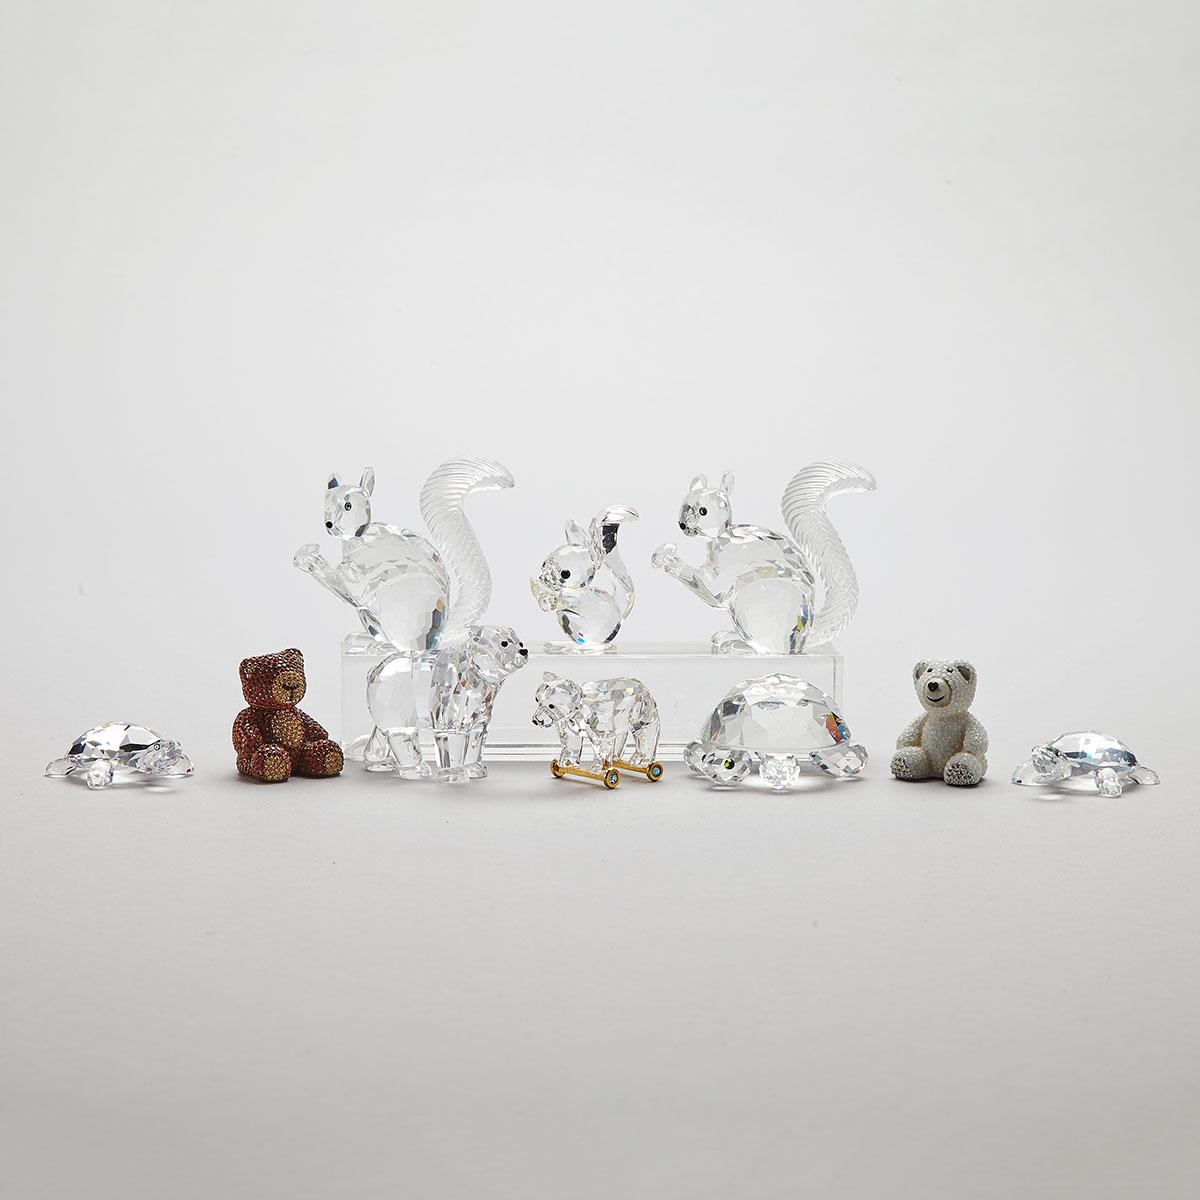 Ten Swarovski Crystal Figurines, late 20th/early 21st century